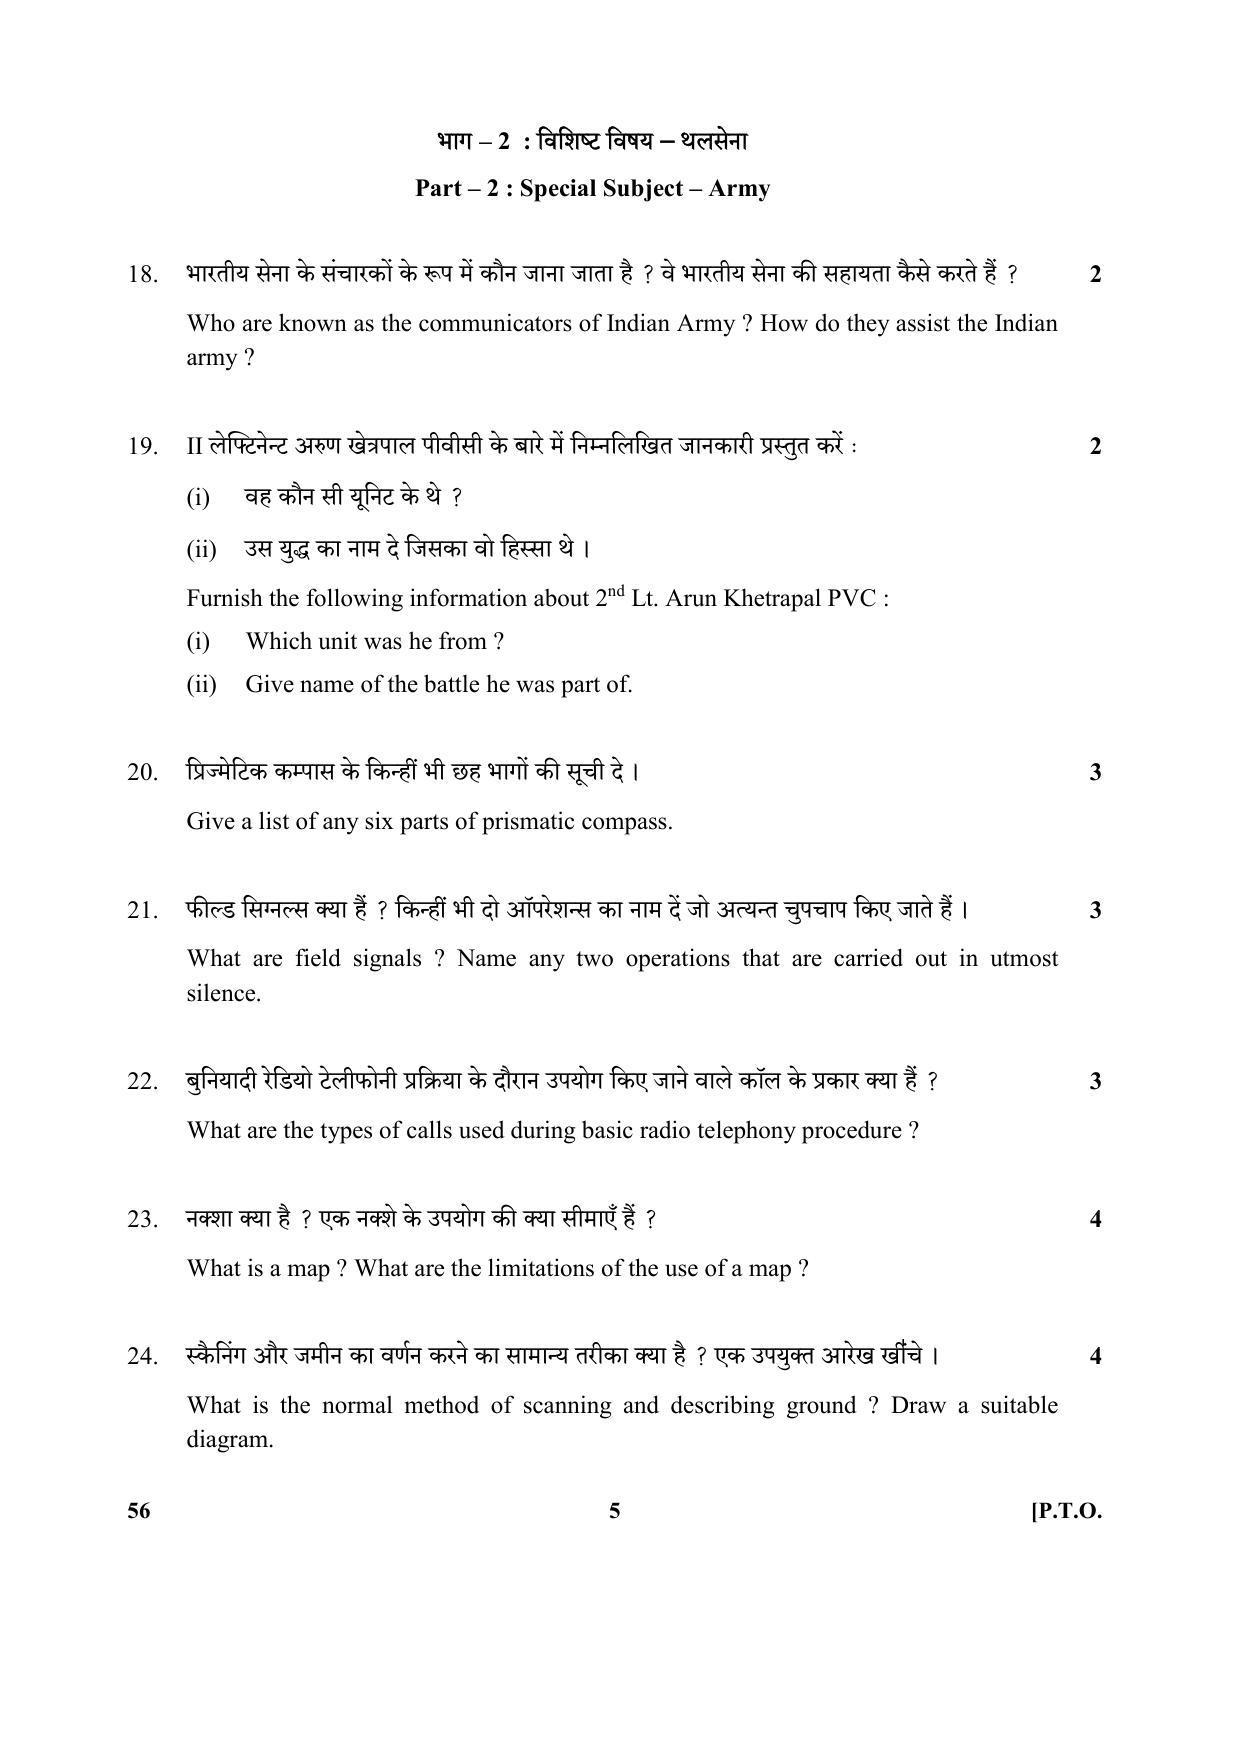 CBSE Class 10 56 (NCC) 2018 Question Paper - Page 5